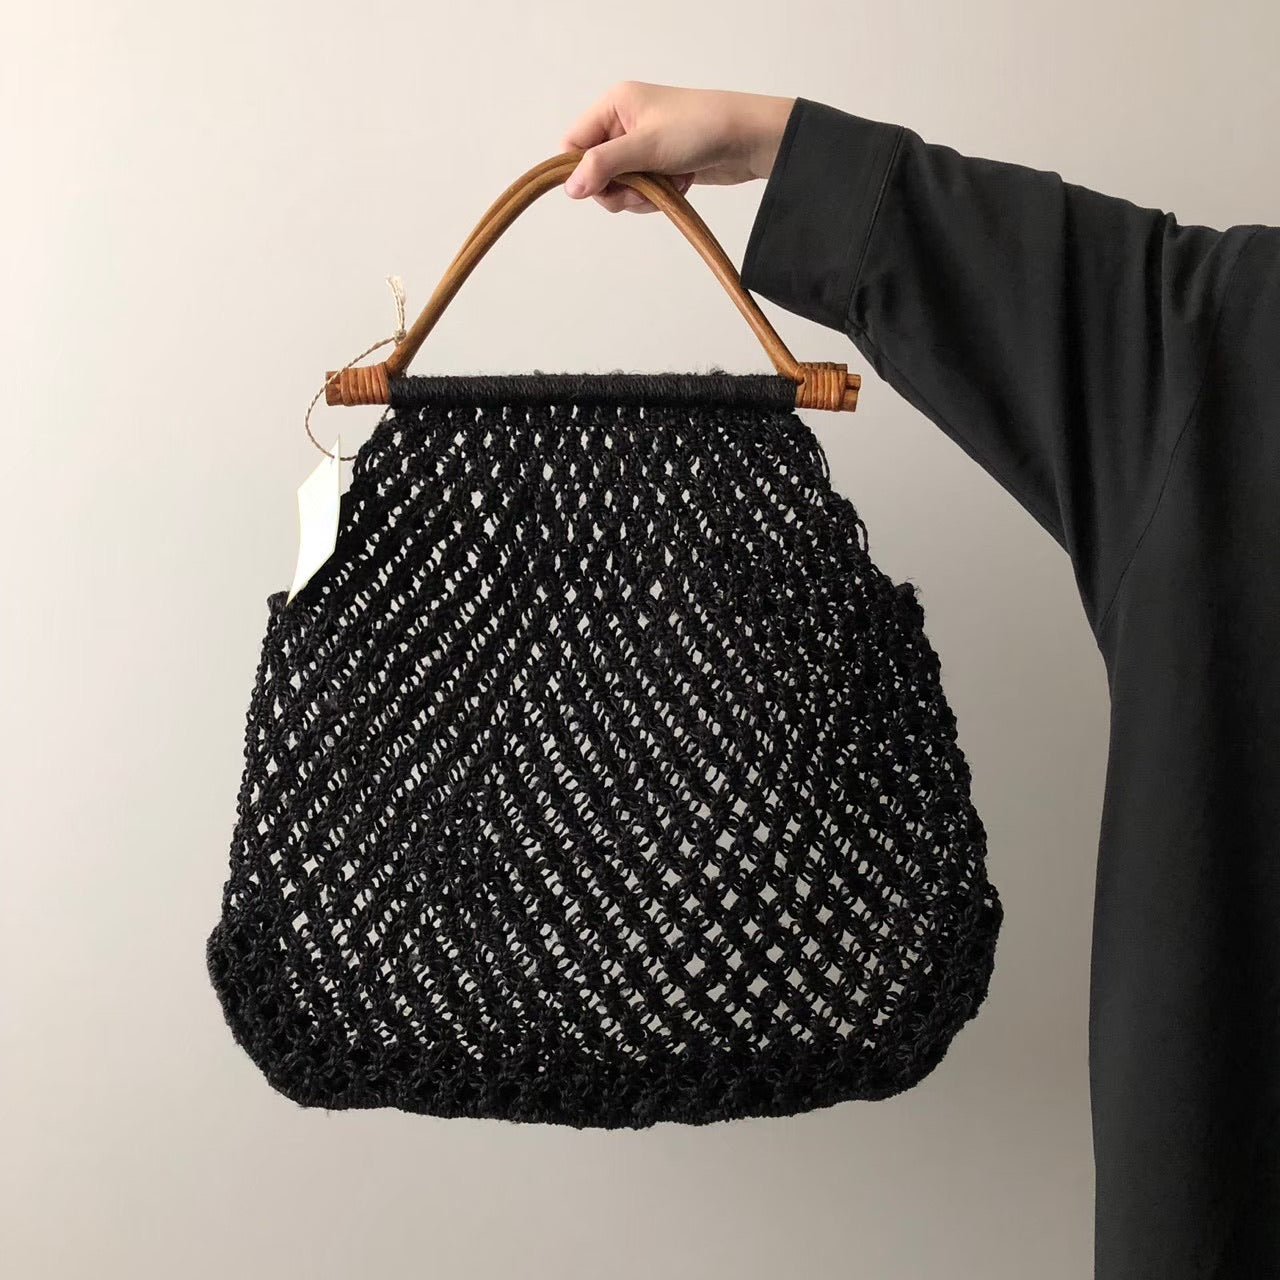 Maison Bengal / Cane handle bag / Black & Natural